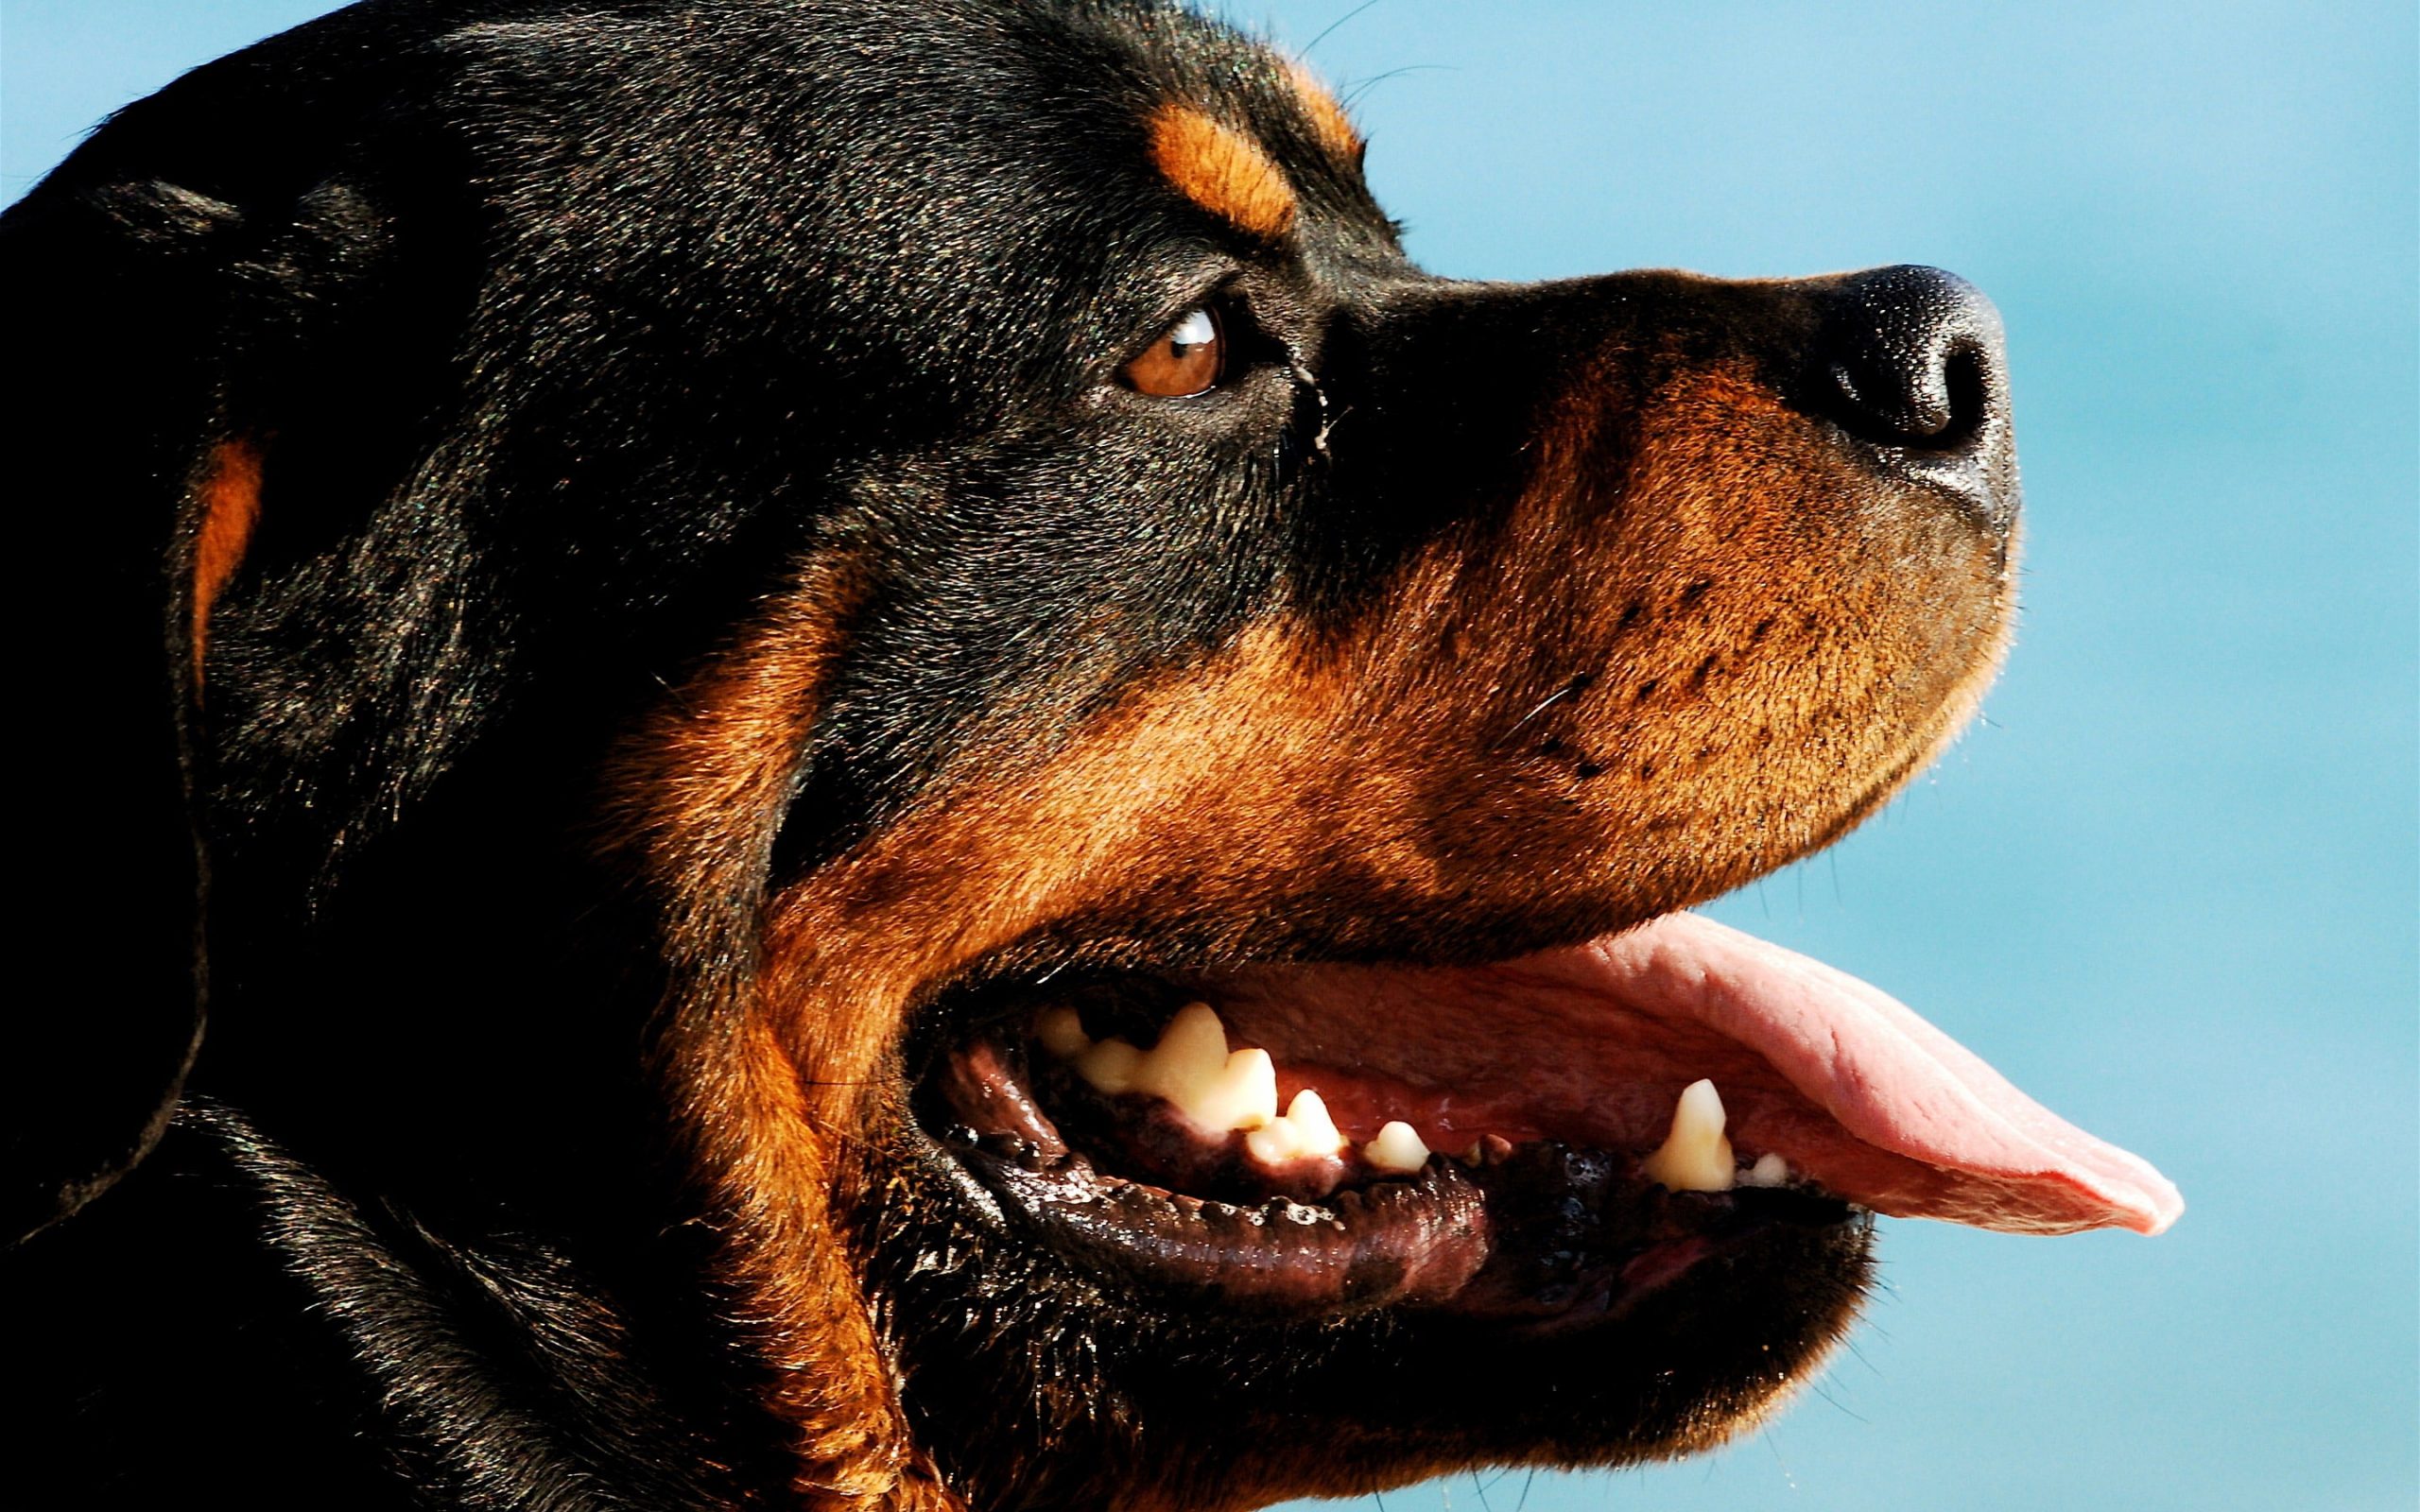 Wallpaper Rottweiler Dog Portrait